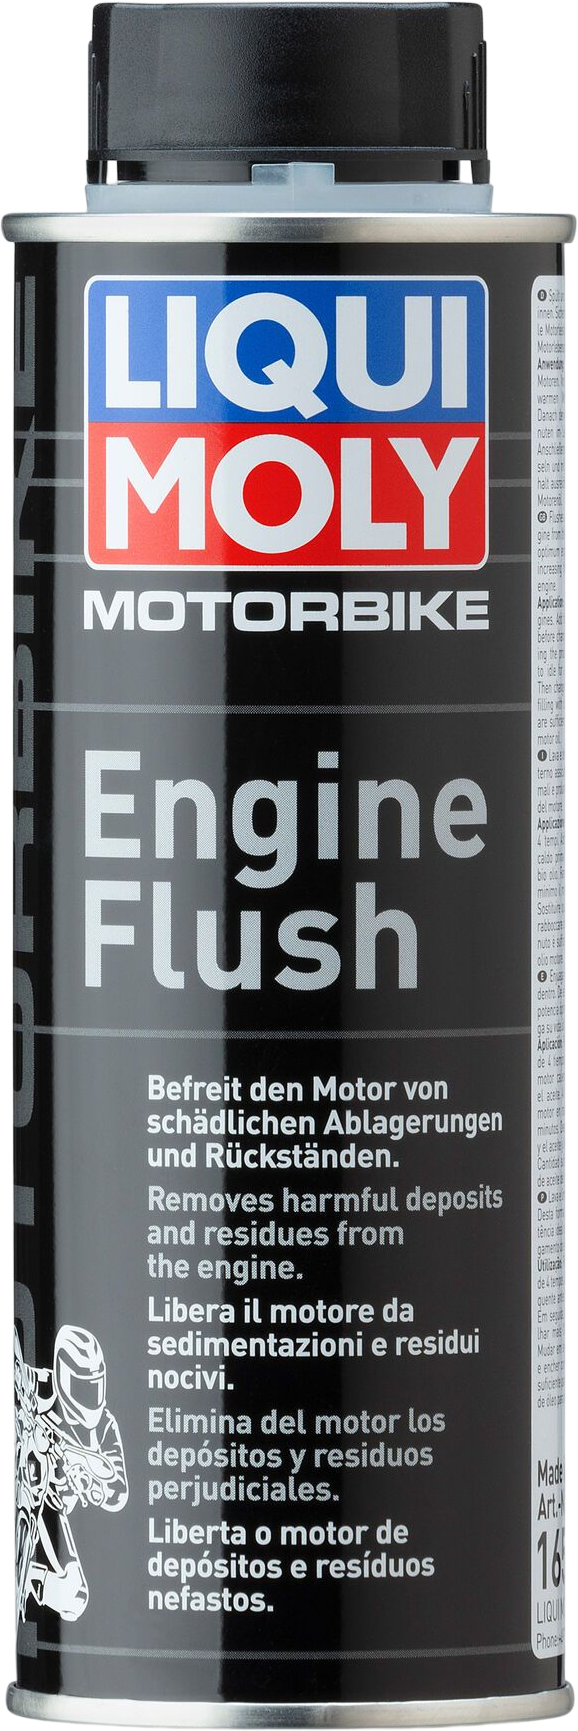 Liqui Moly Motorbike Engine Flush, 250 ml